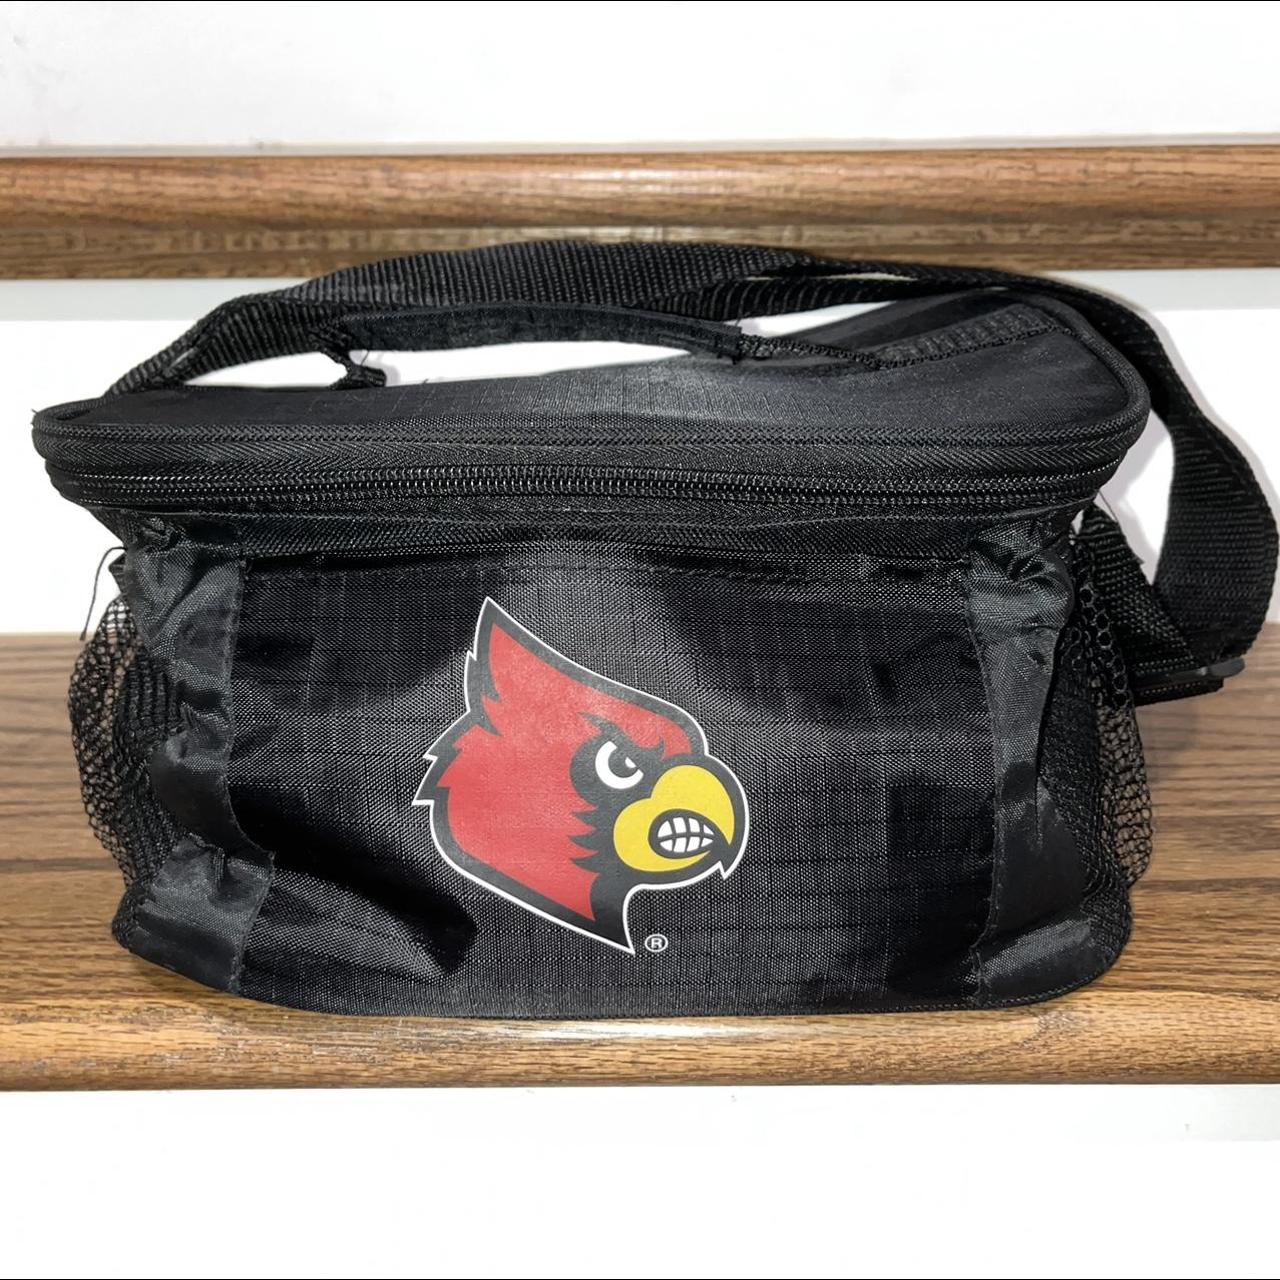 University of Louisville Bag 